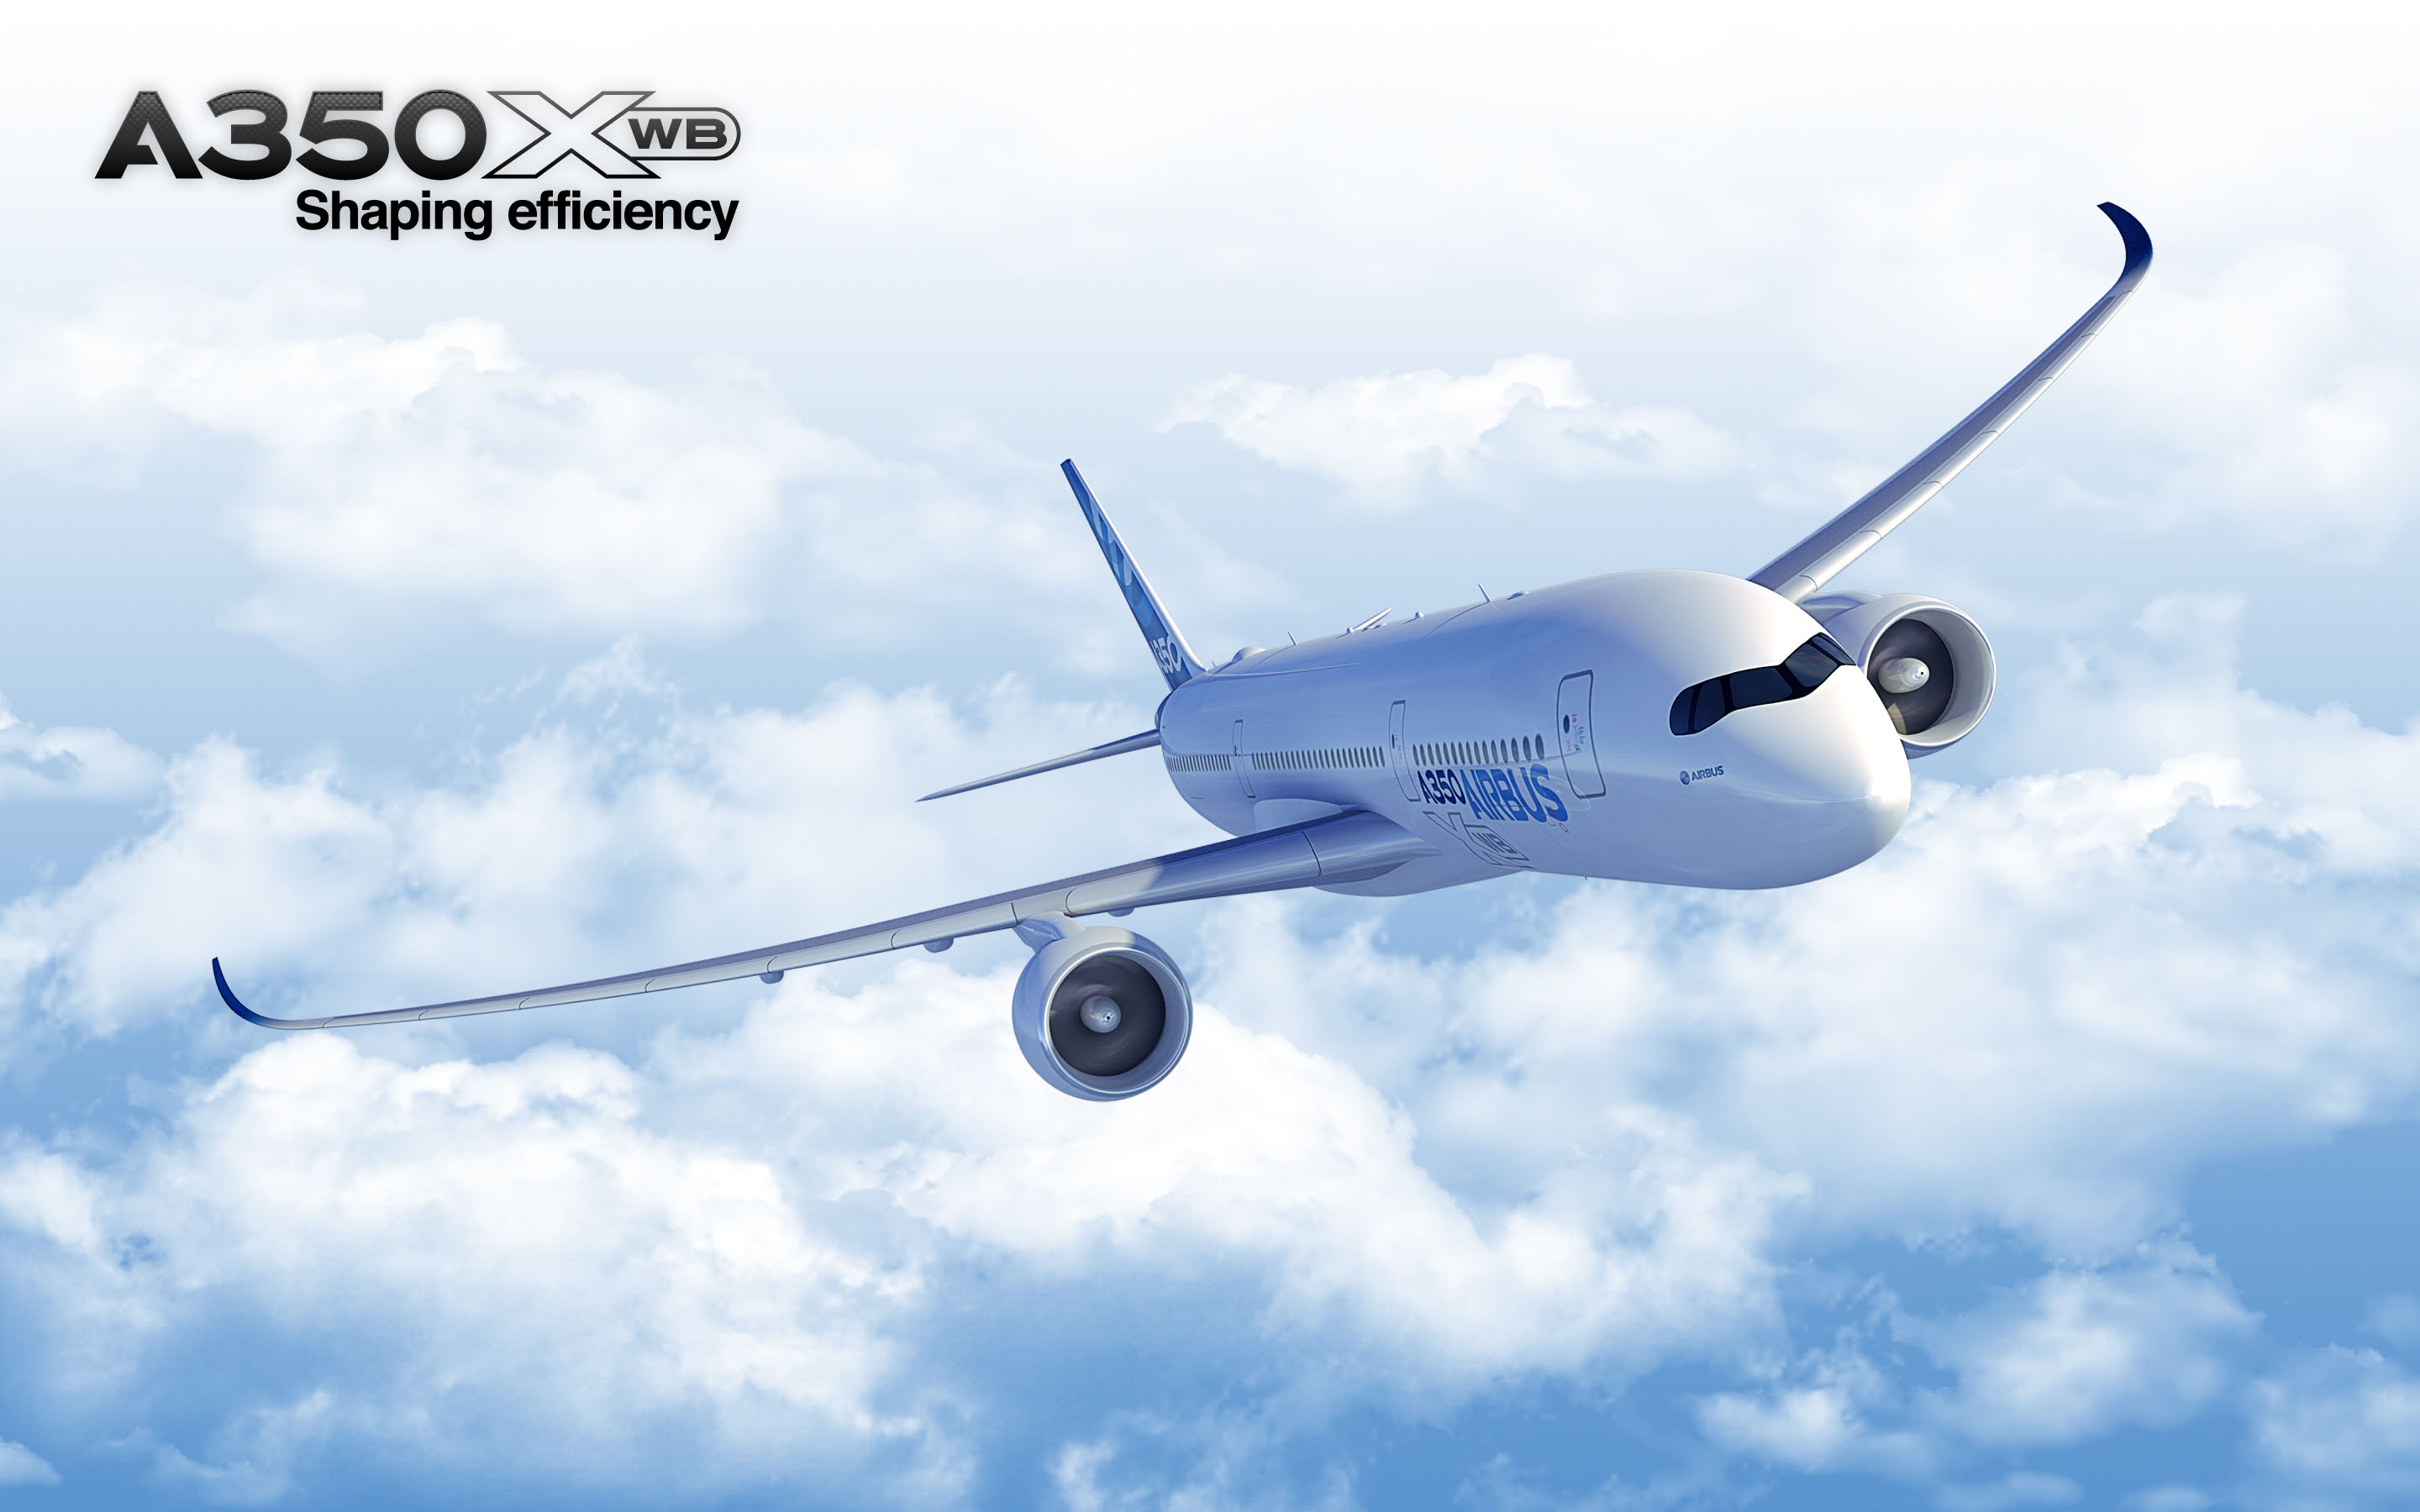 Airbus A350 Xwb Shaping Efficiency Wallpaper On